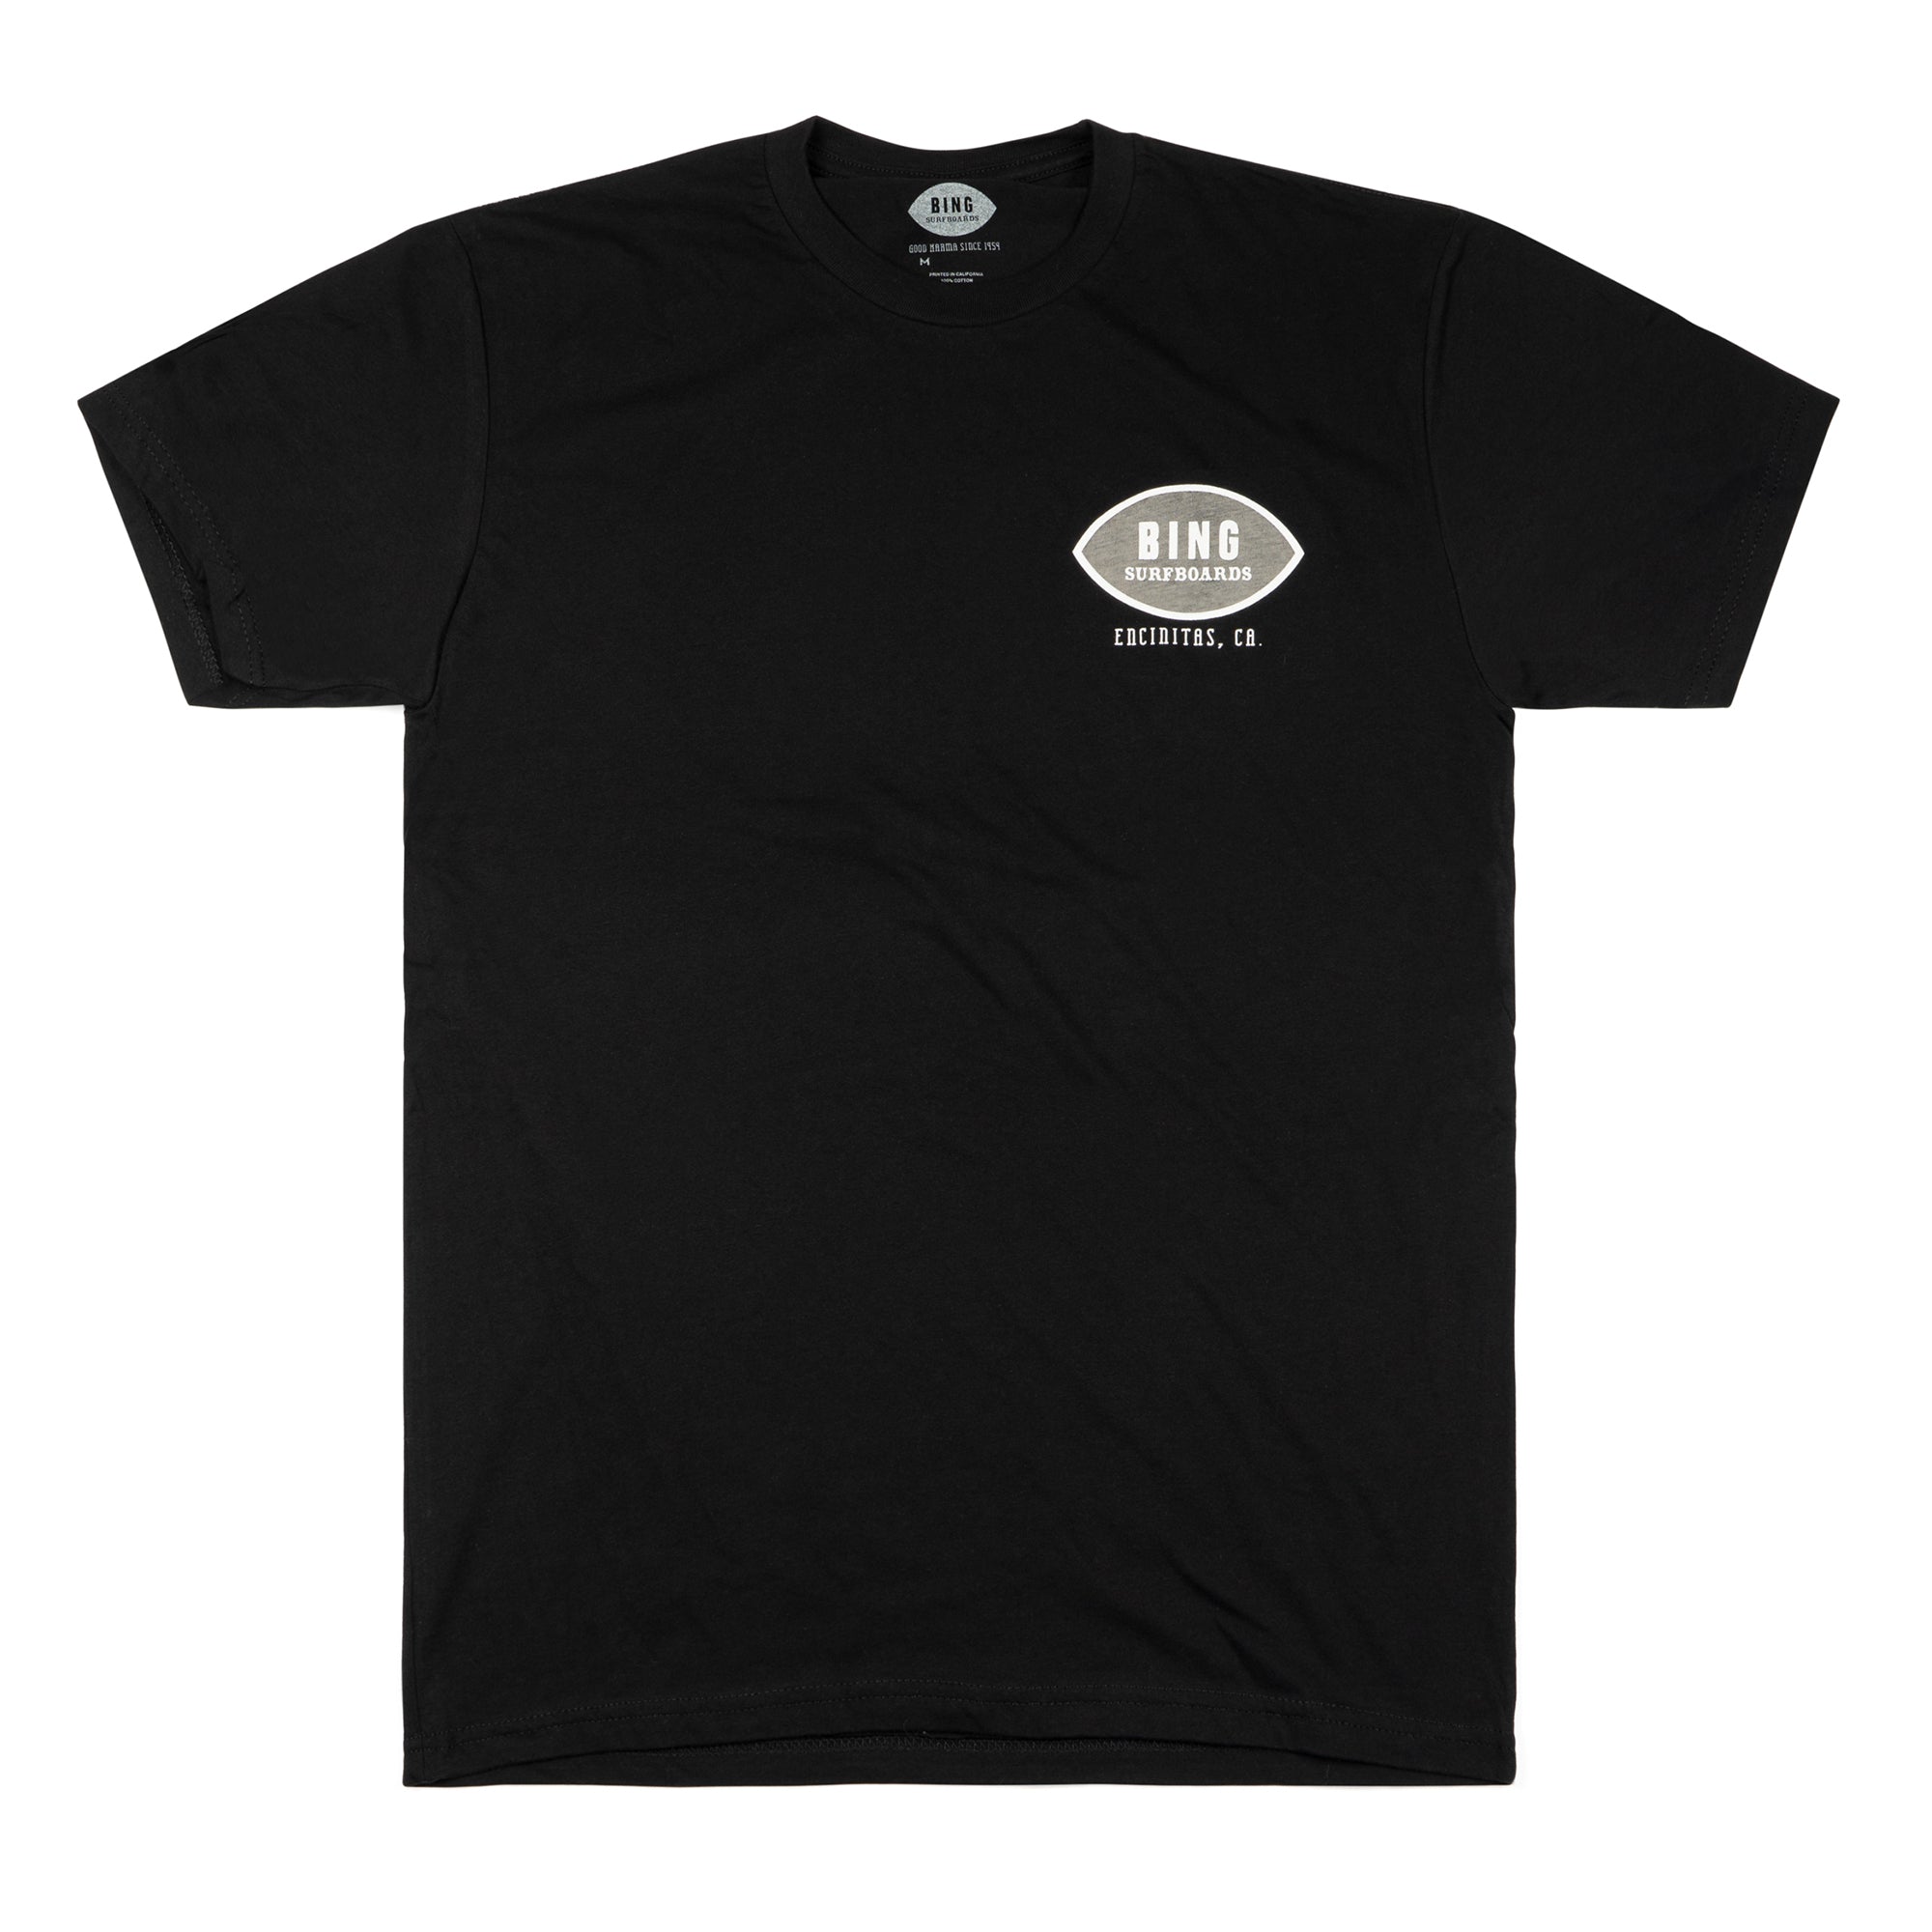 CLASSIC ENCINITAS II Premium S/S T-Shirt - Black